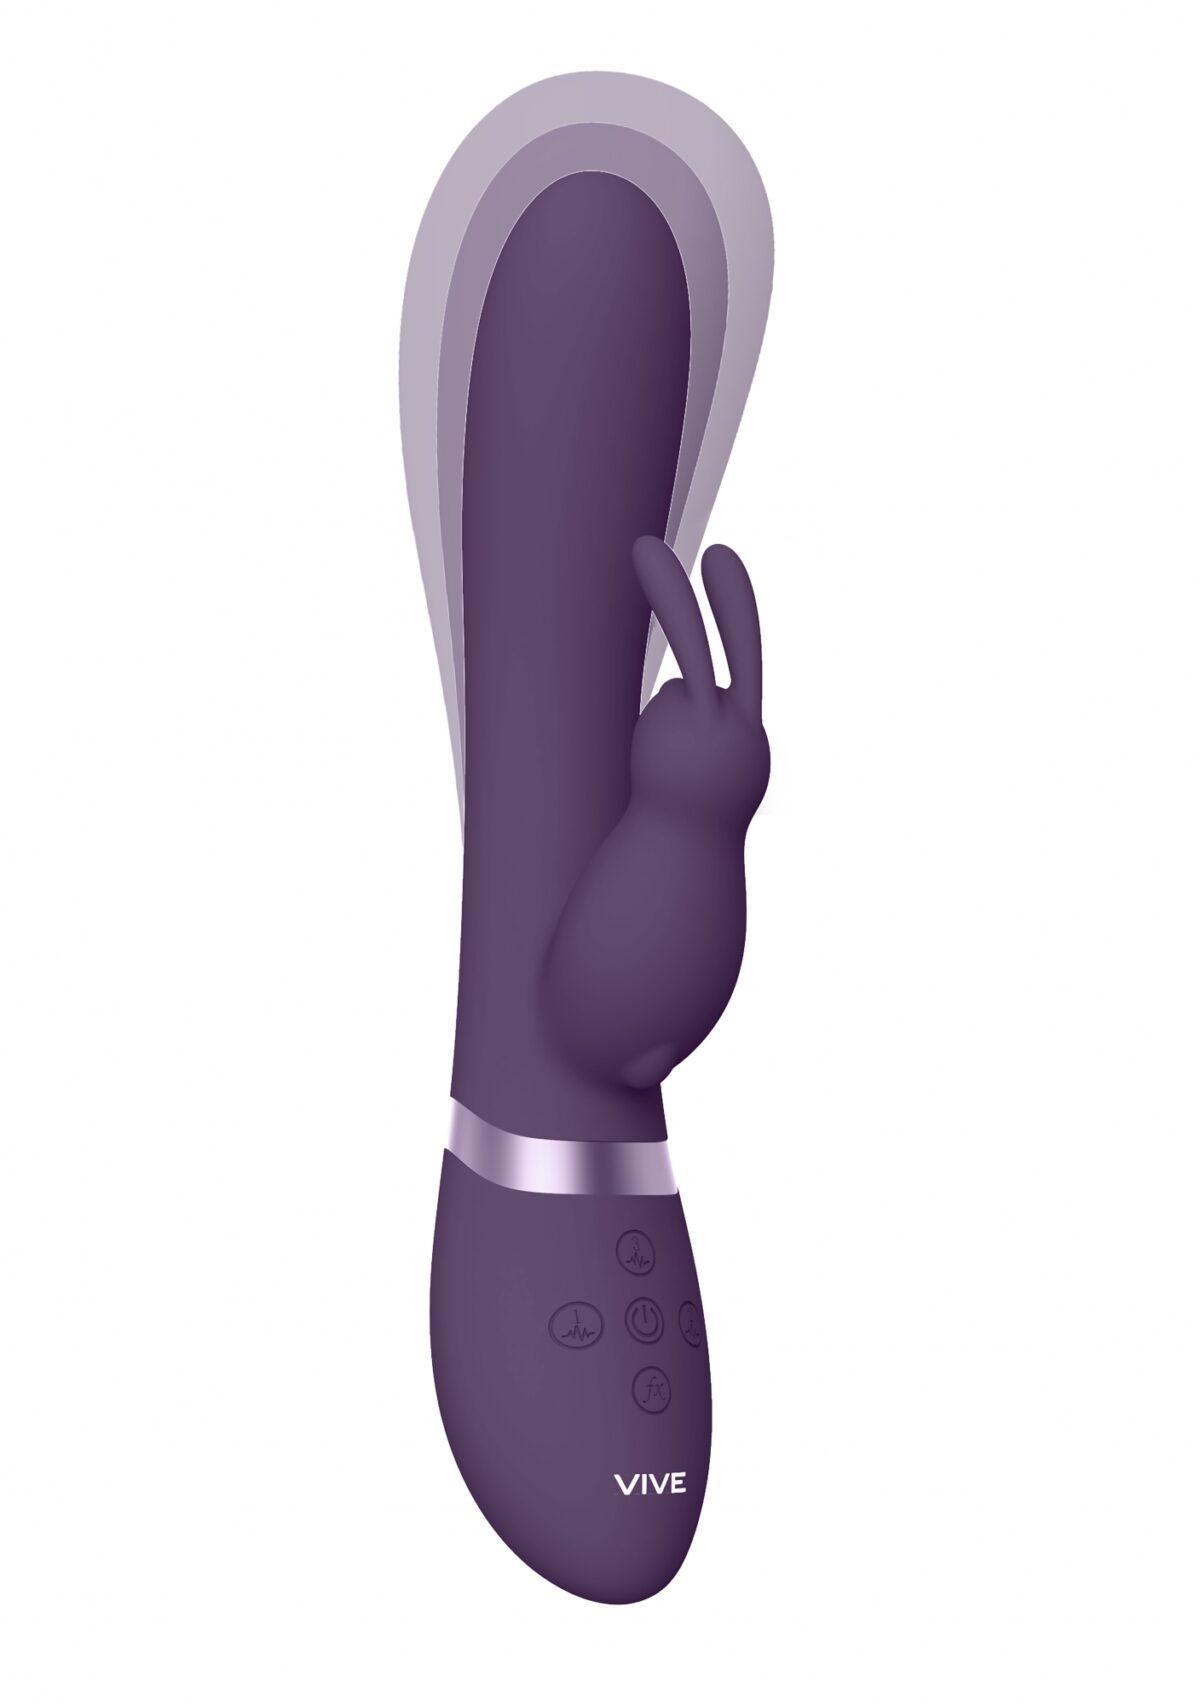 Taka Inflatable Vibrating Rabbit purple